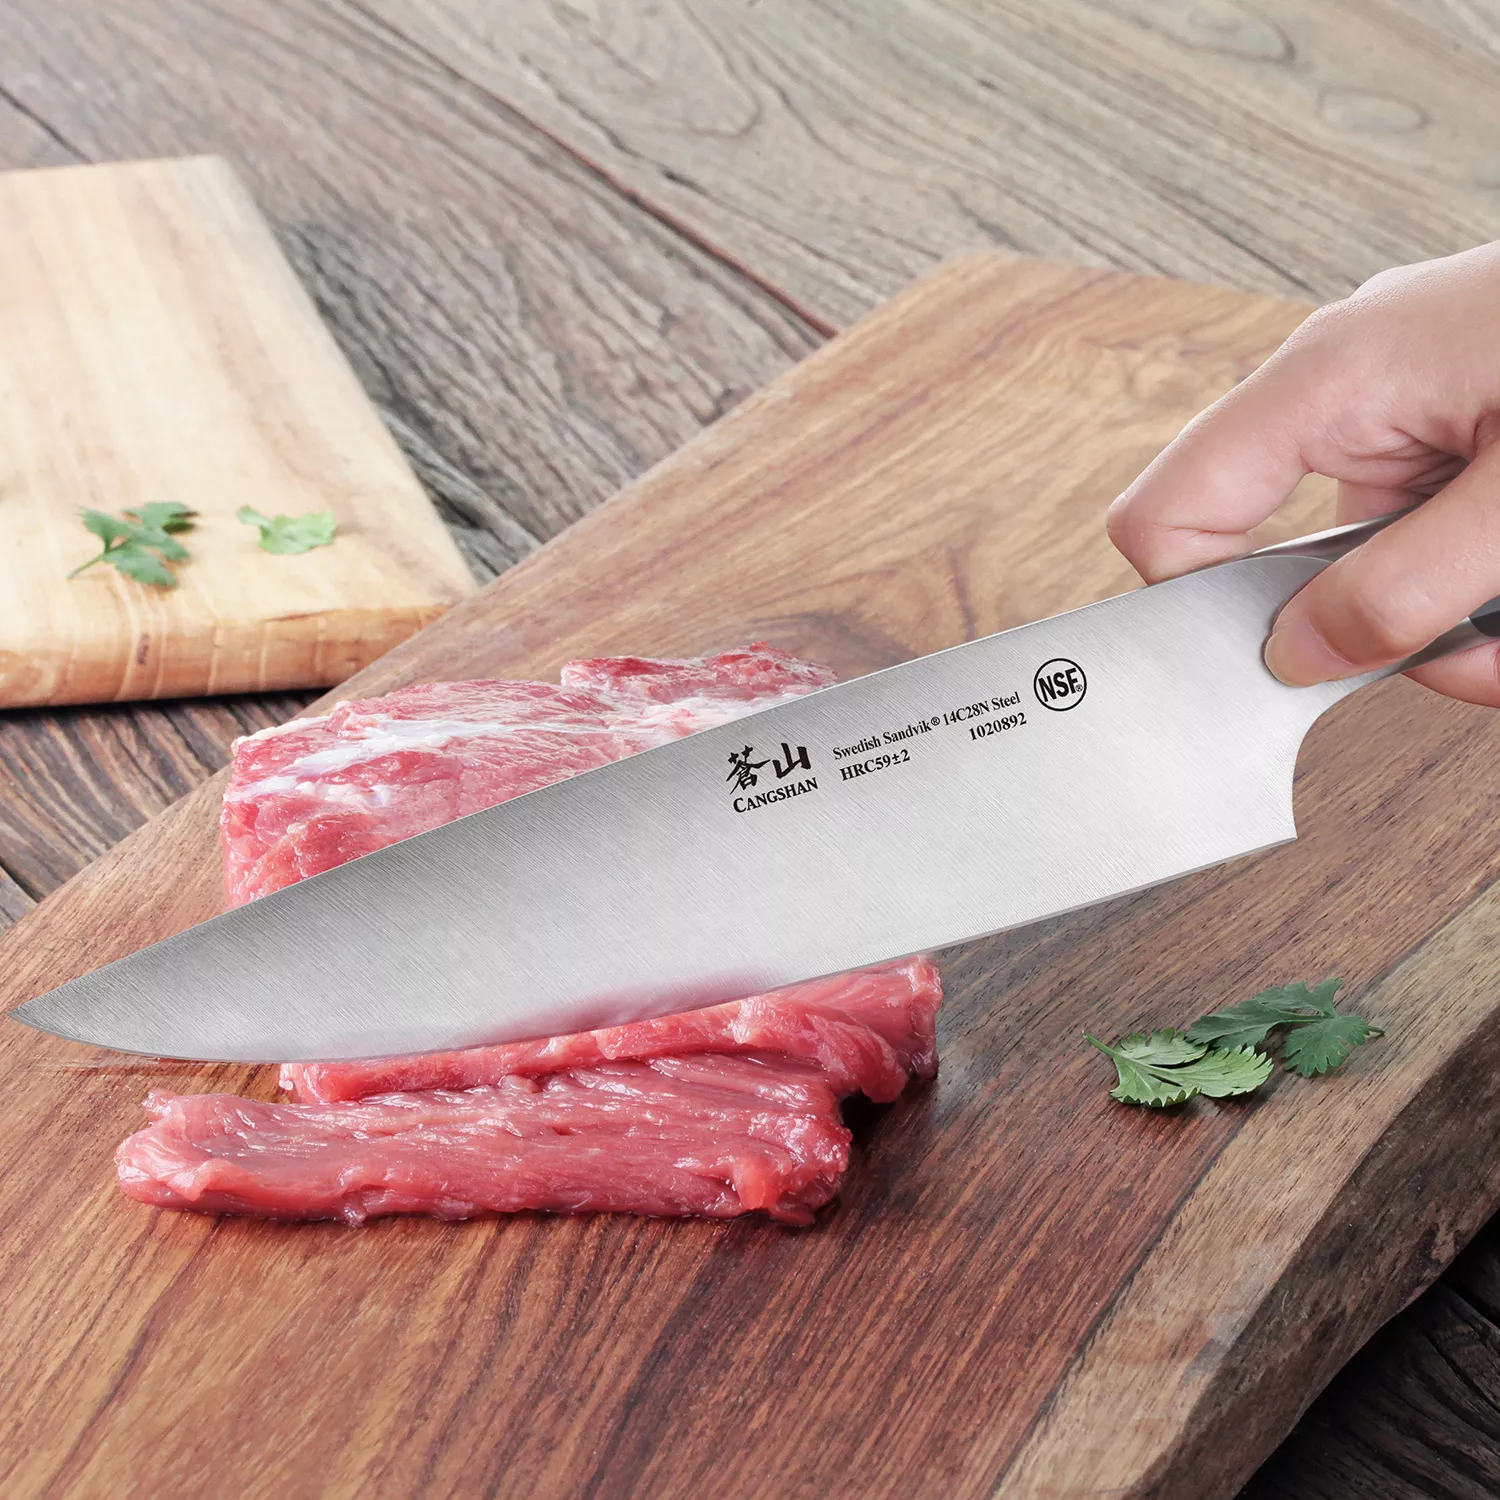 Cangshan TC Series Swedish Sandvik Steel Forged Chef Knife & Wood